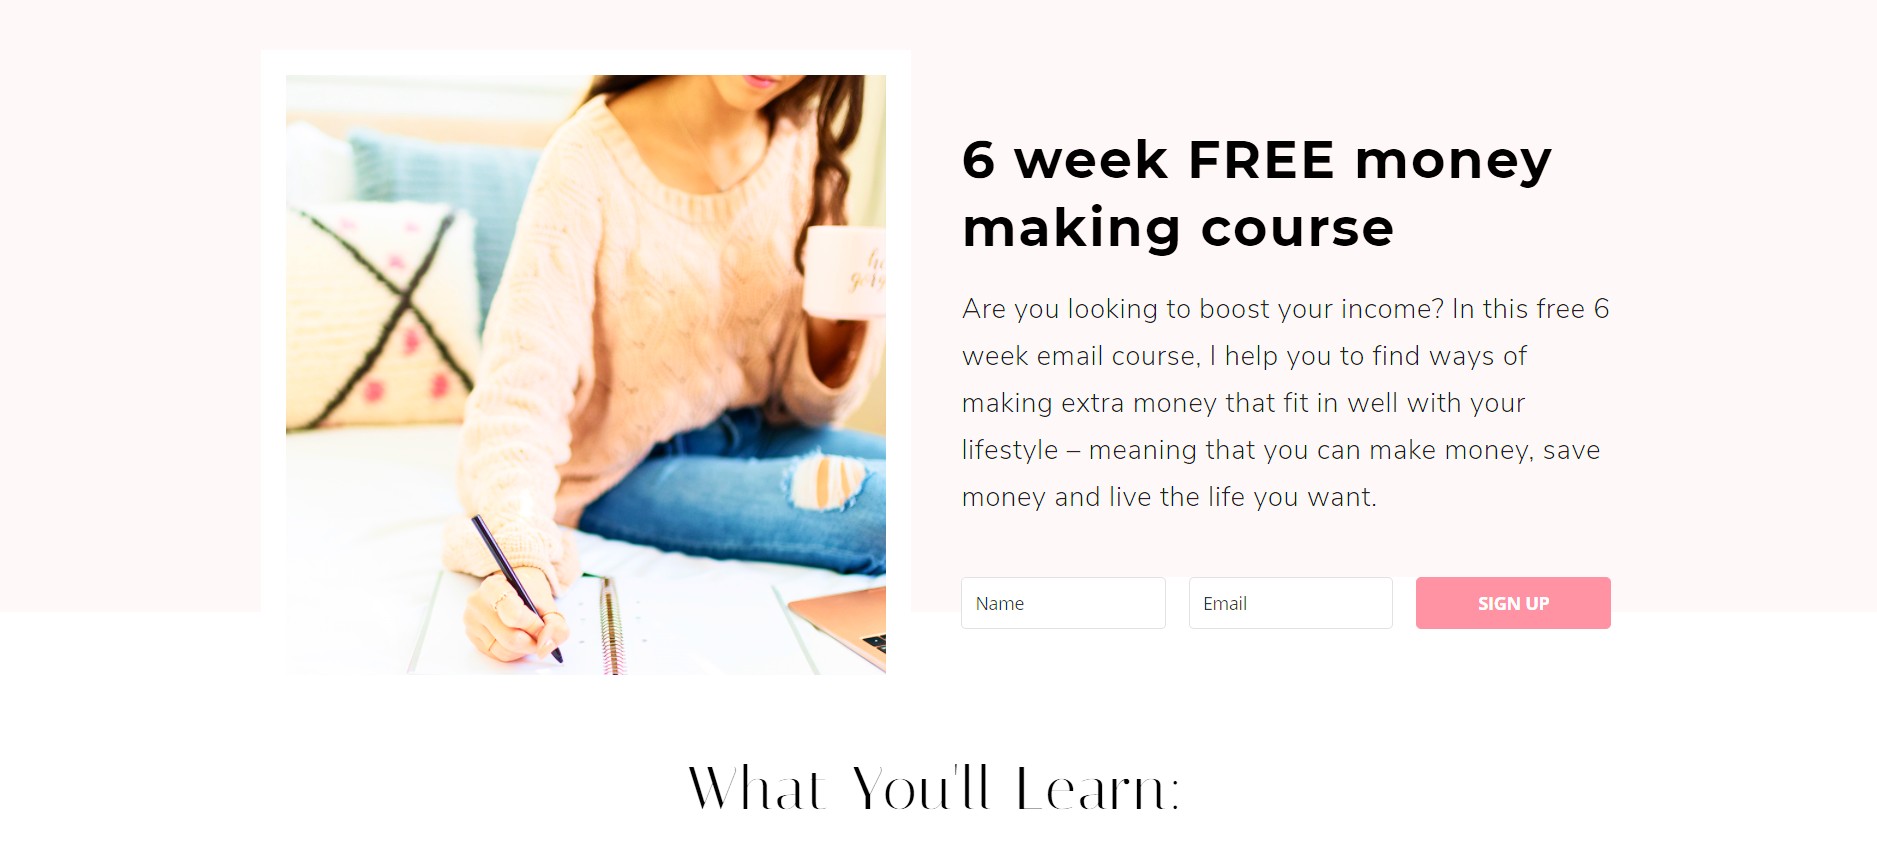 <img src="free.jpg" alt="free money online blogging courses for bloggers "/> 